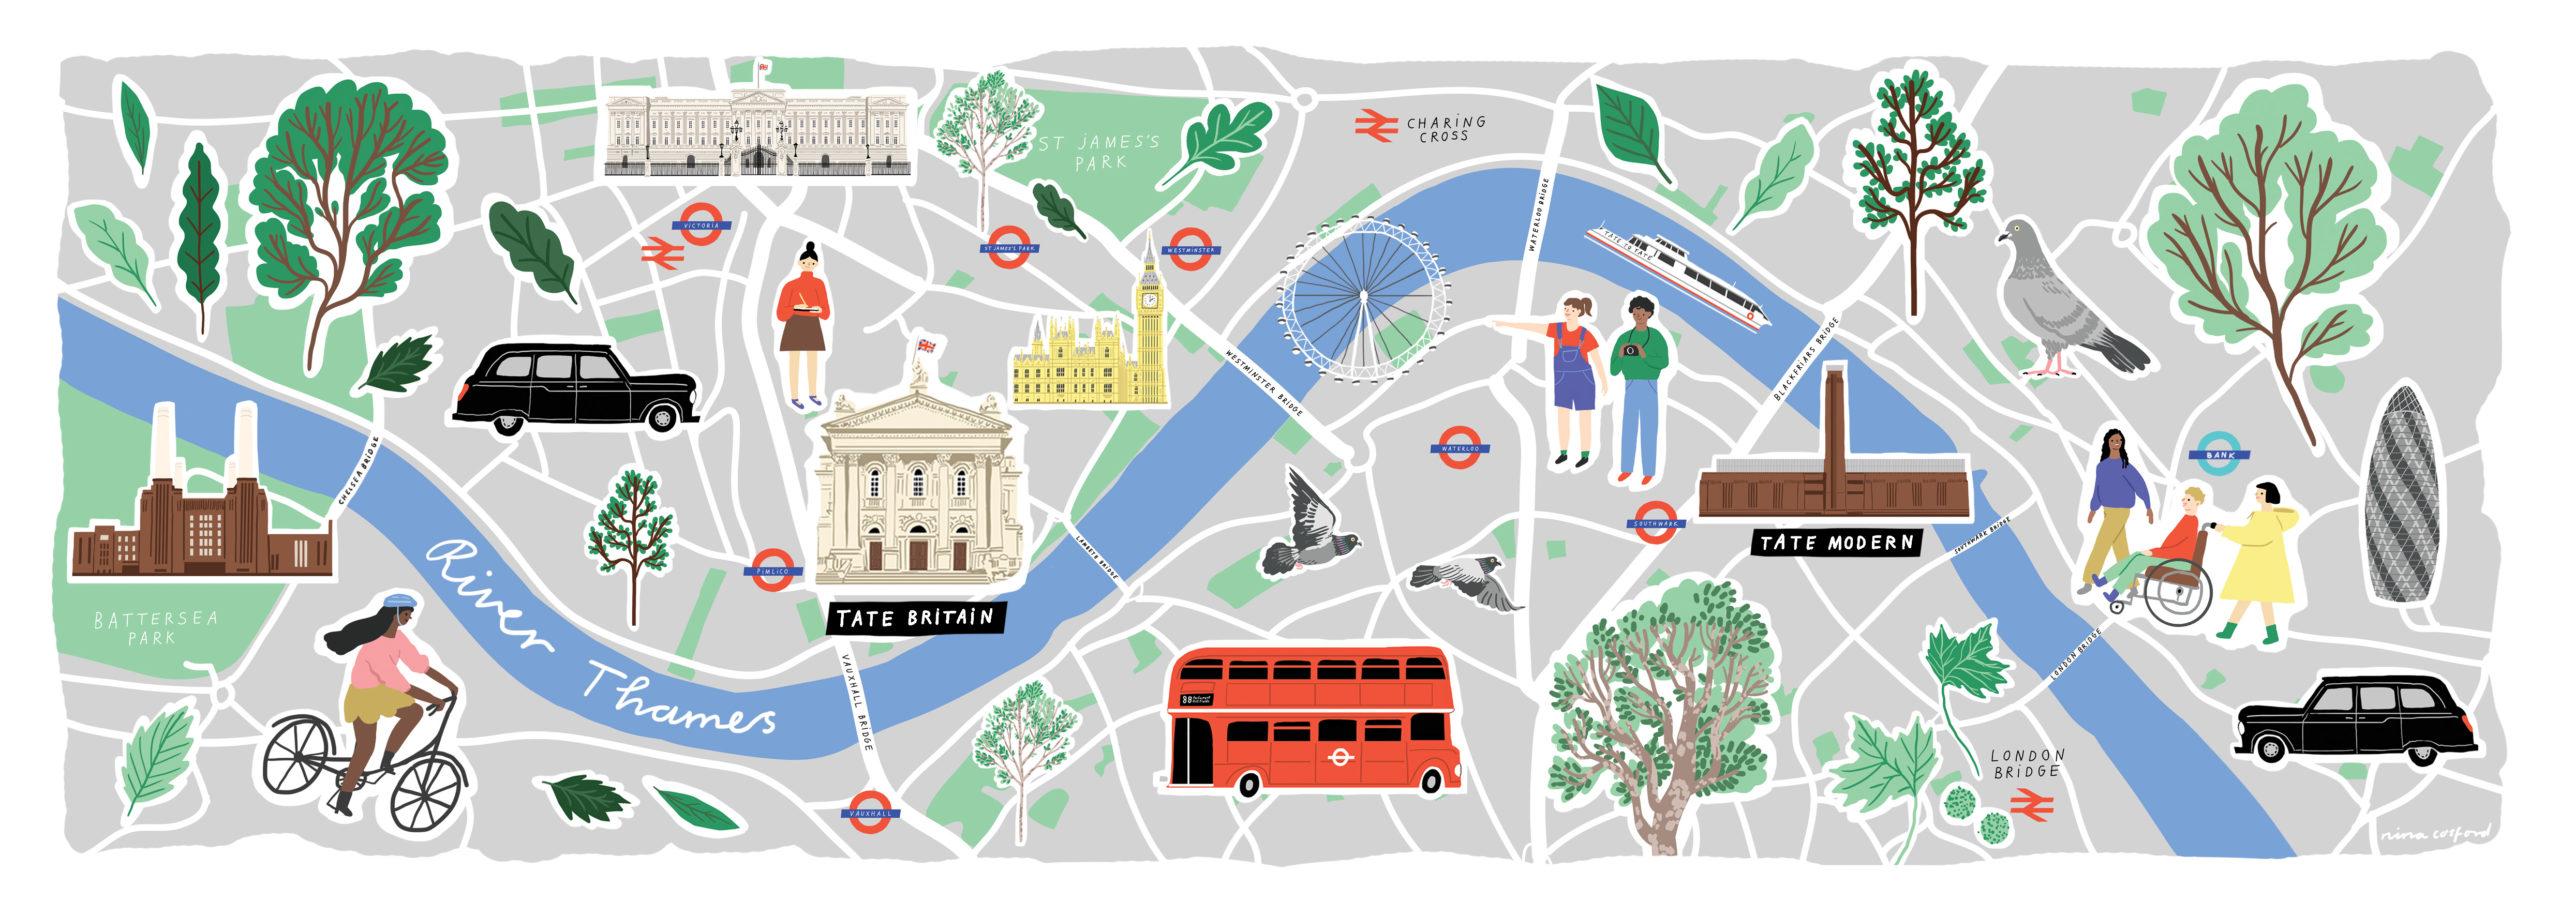 Nina Cosford Illustration - tate britain london map